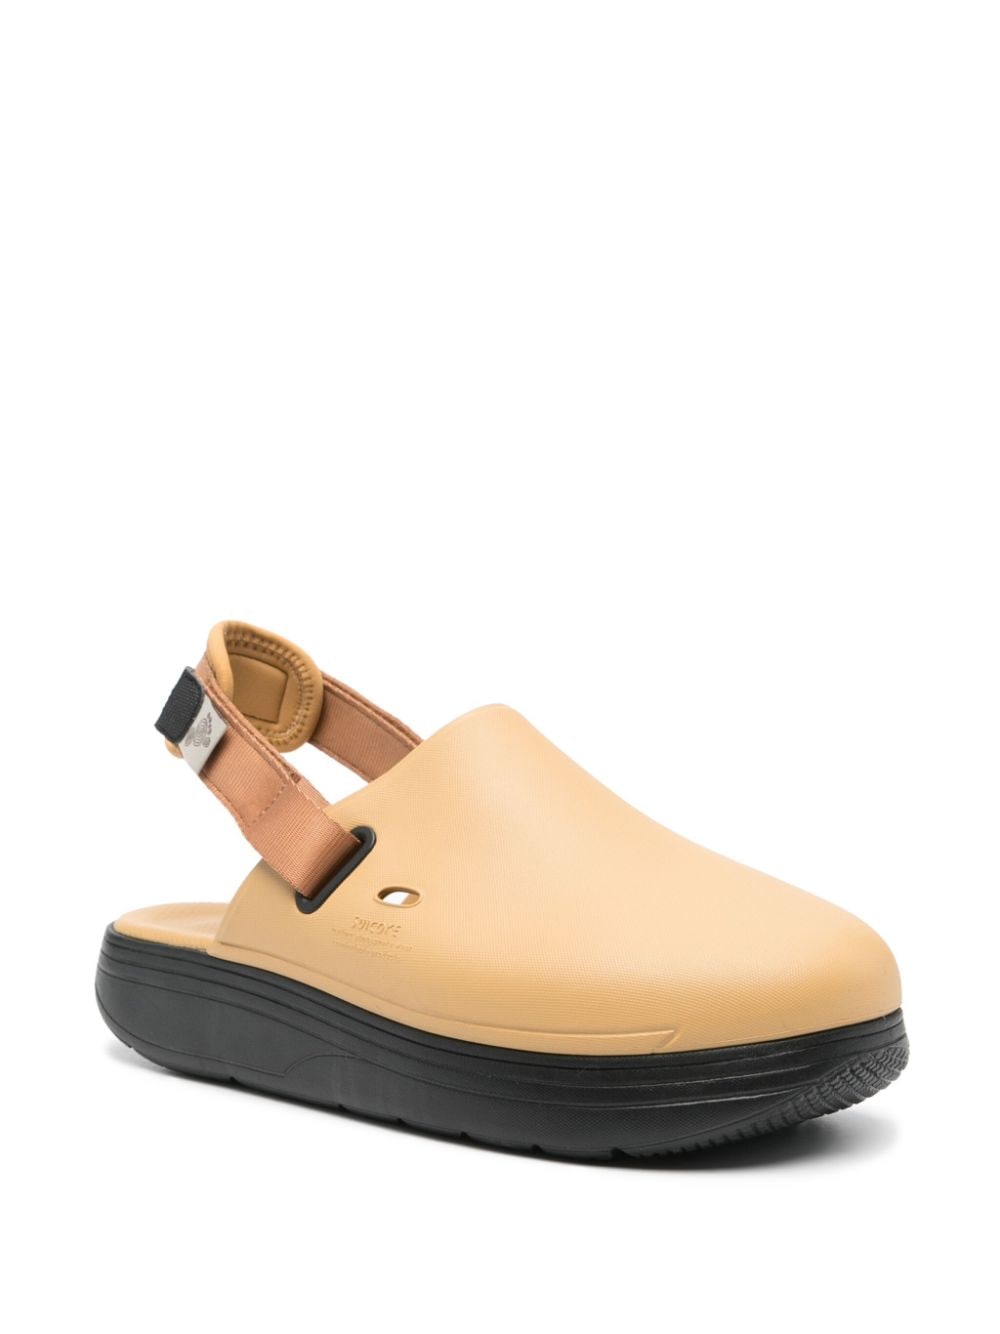 Cappo slingback sandals<BR/><BR/><BR/>